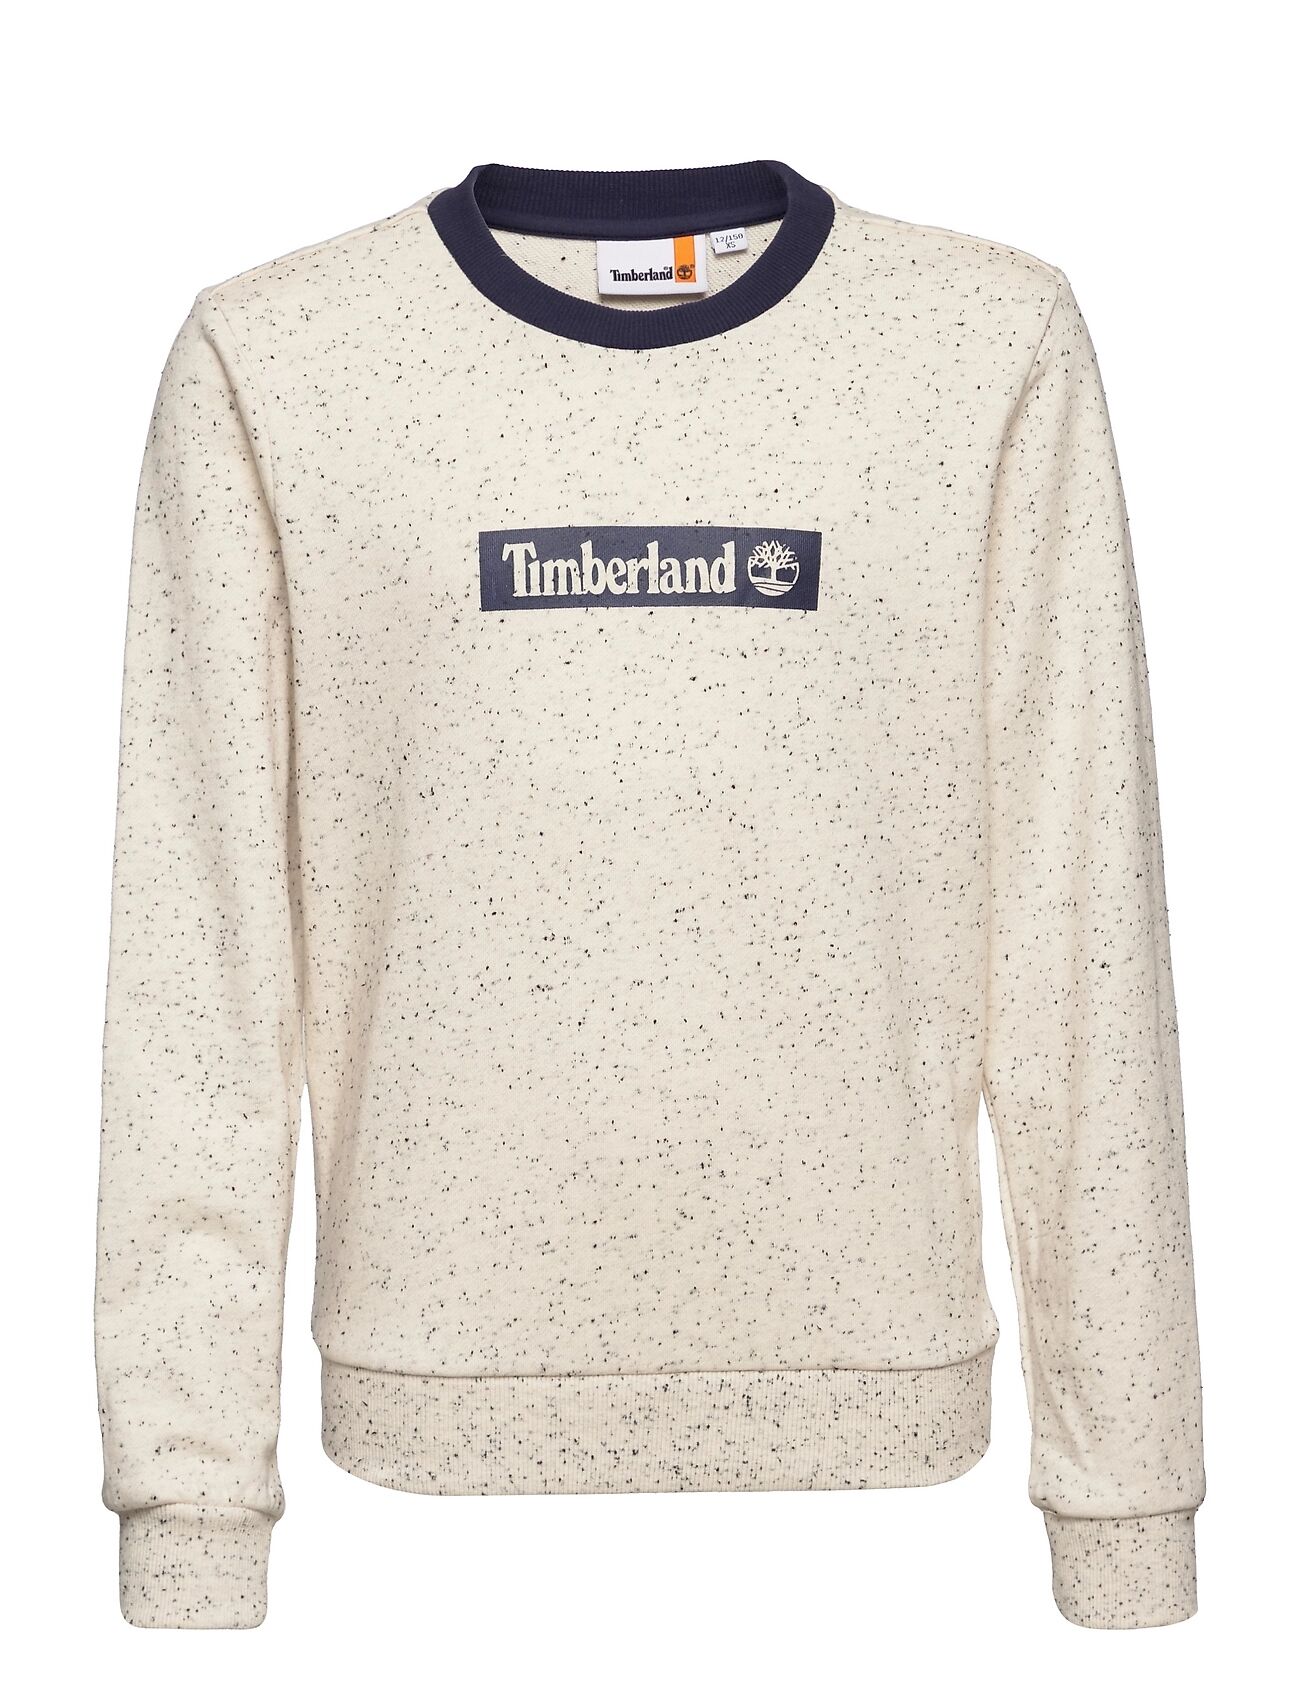 Timberland Sweatshirt Sweat-shirt Genser Multi/mønstret Timberland